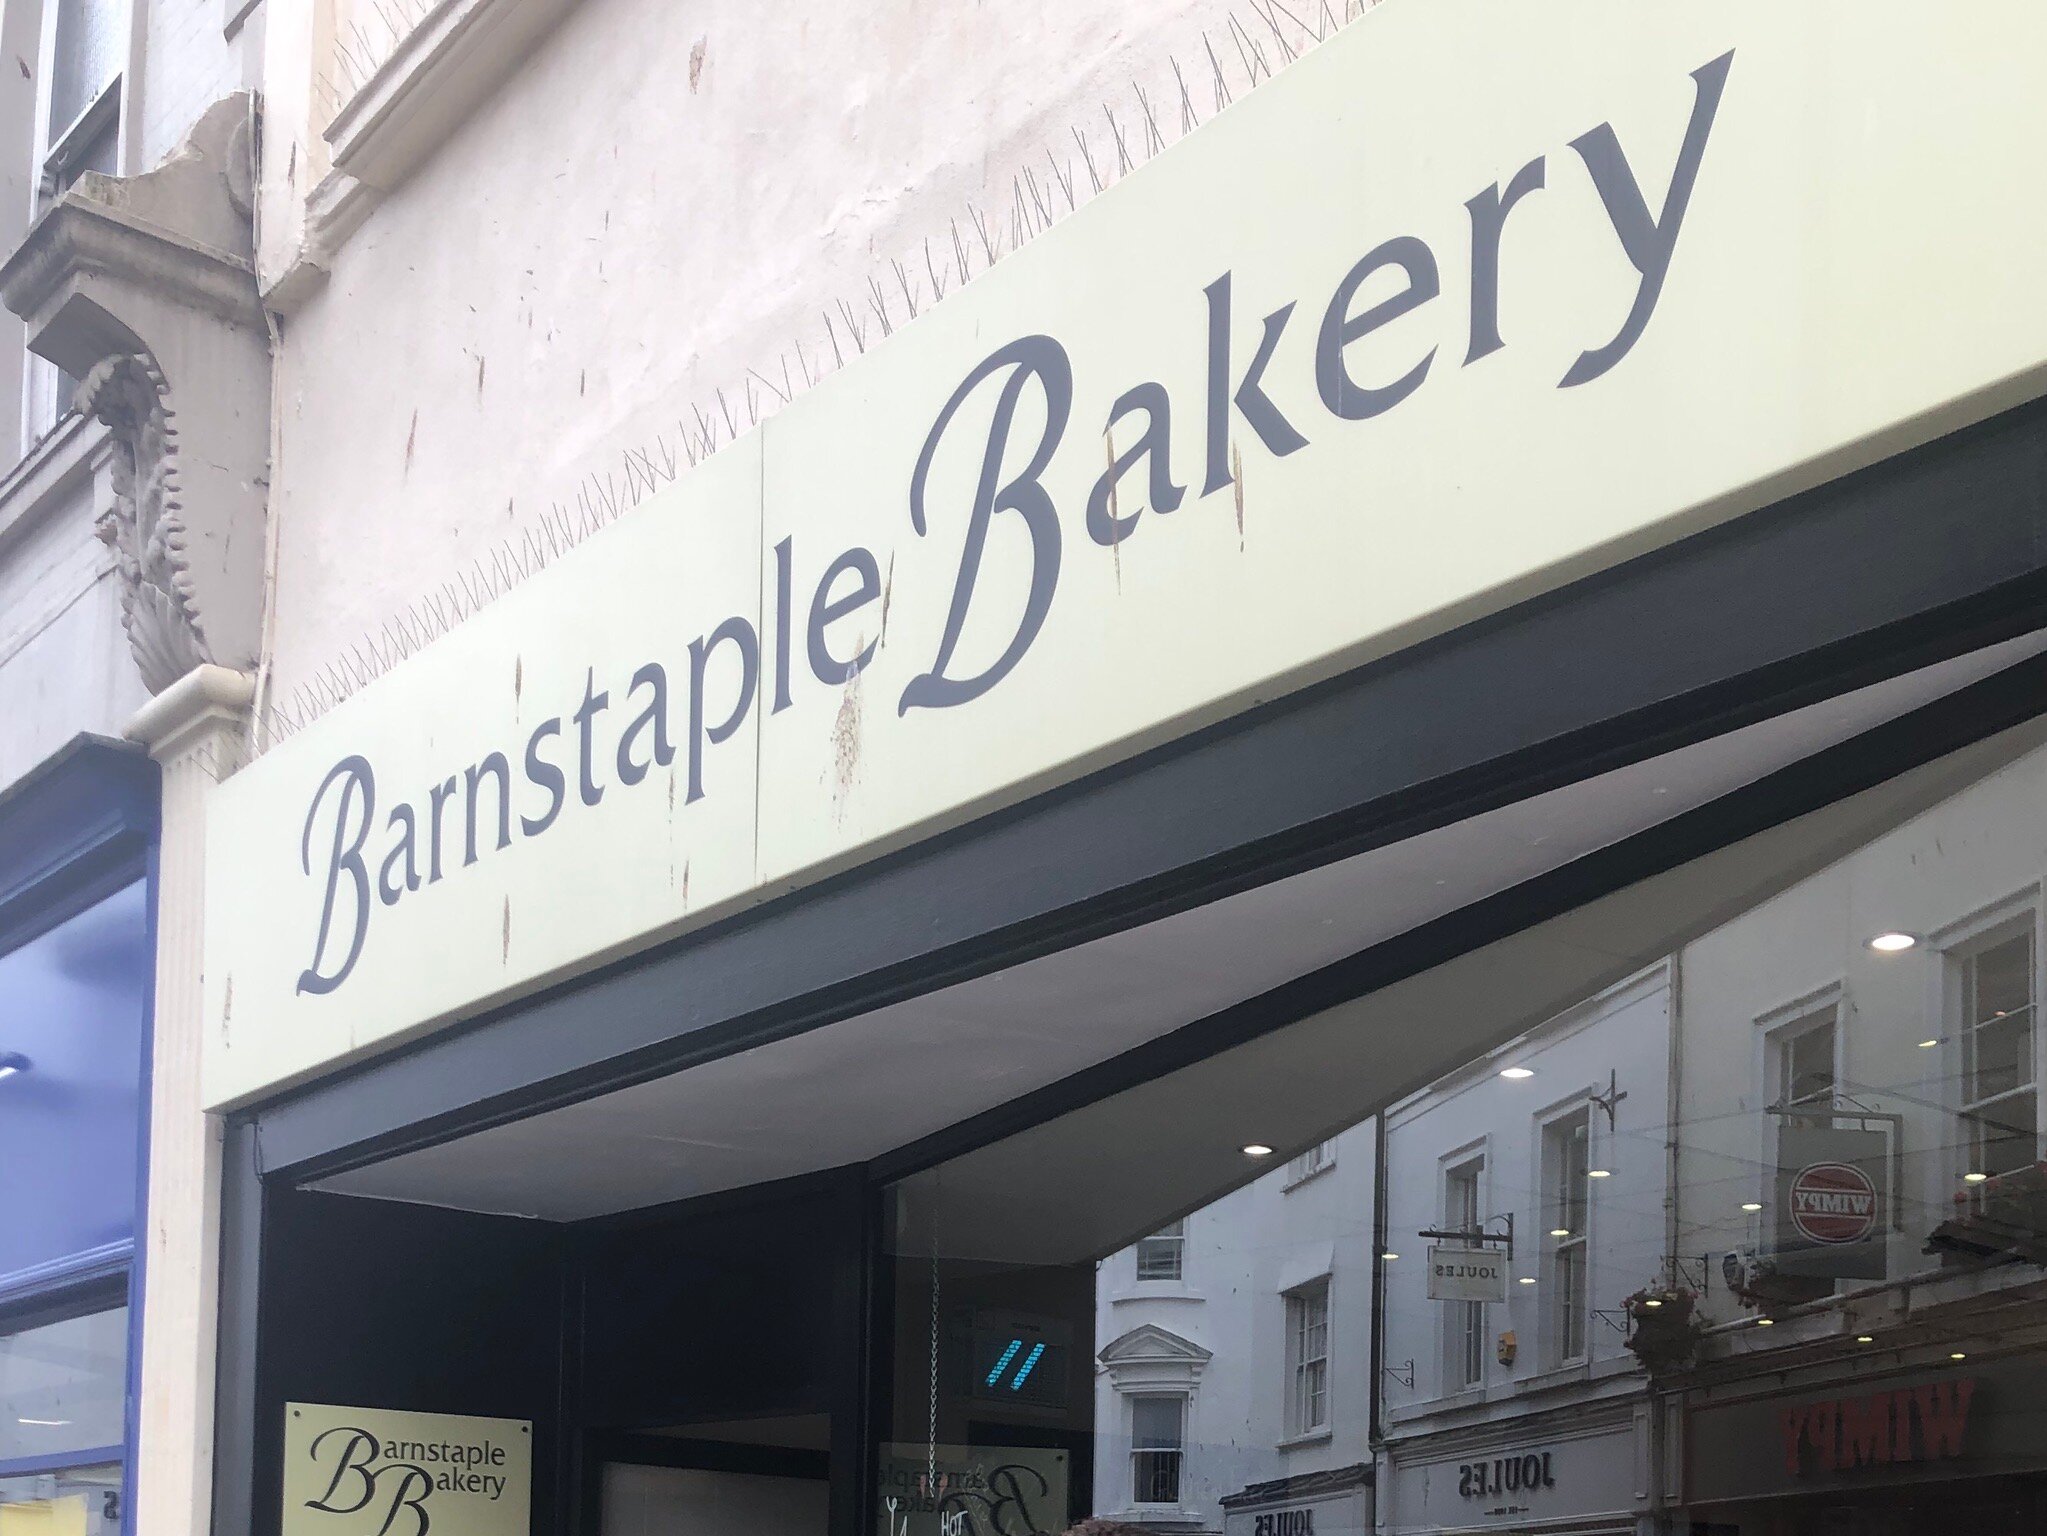 Barnstaple Bakery